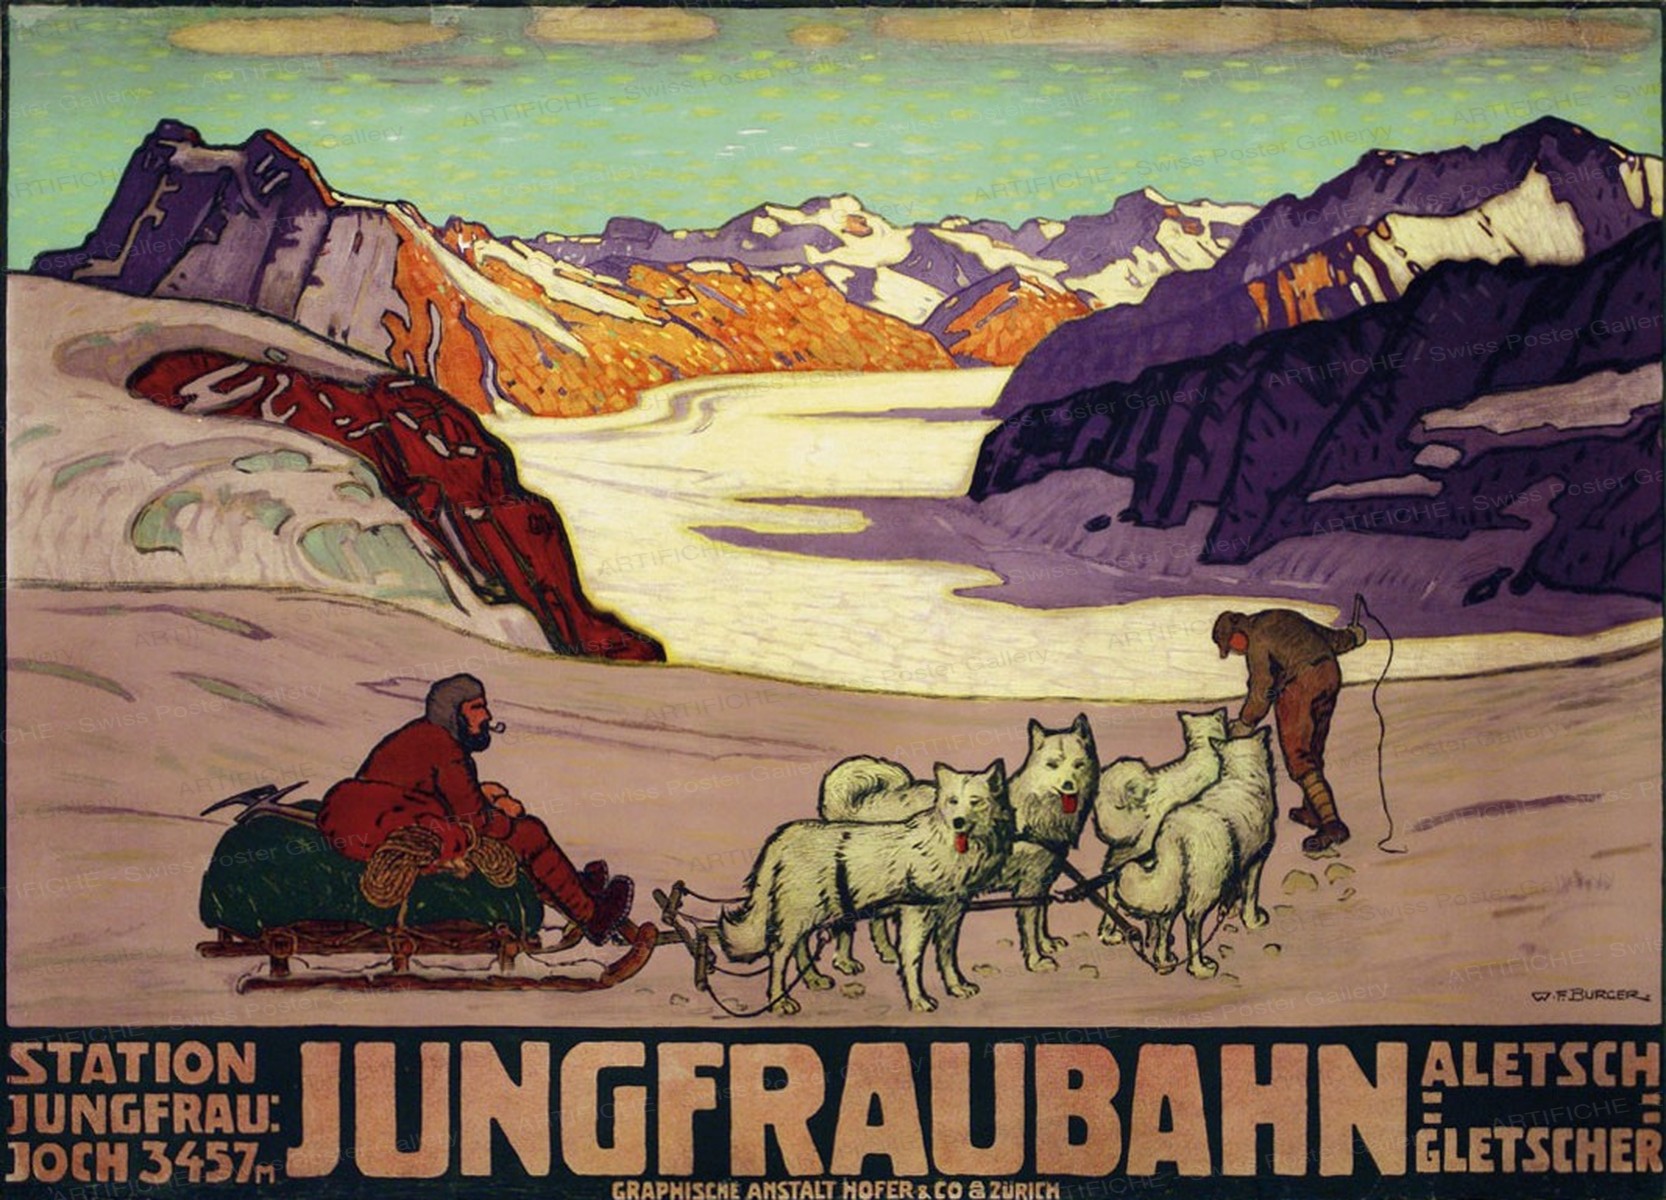 Cable car to Jungfrau, Wilhelm Friedrich Burger